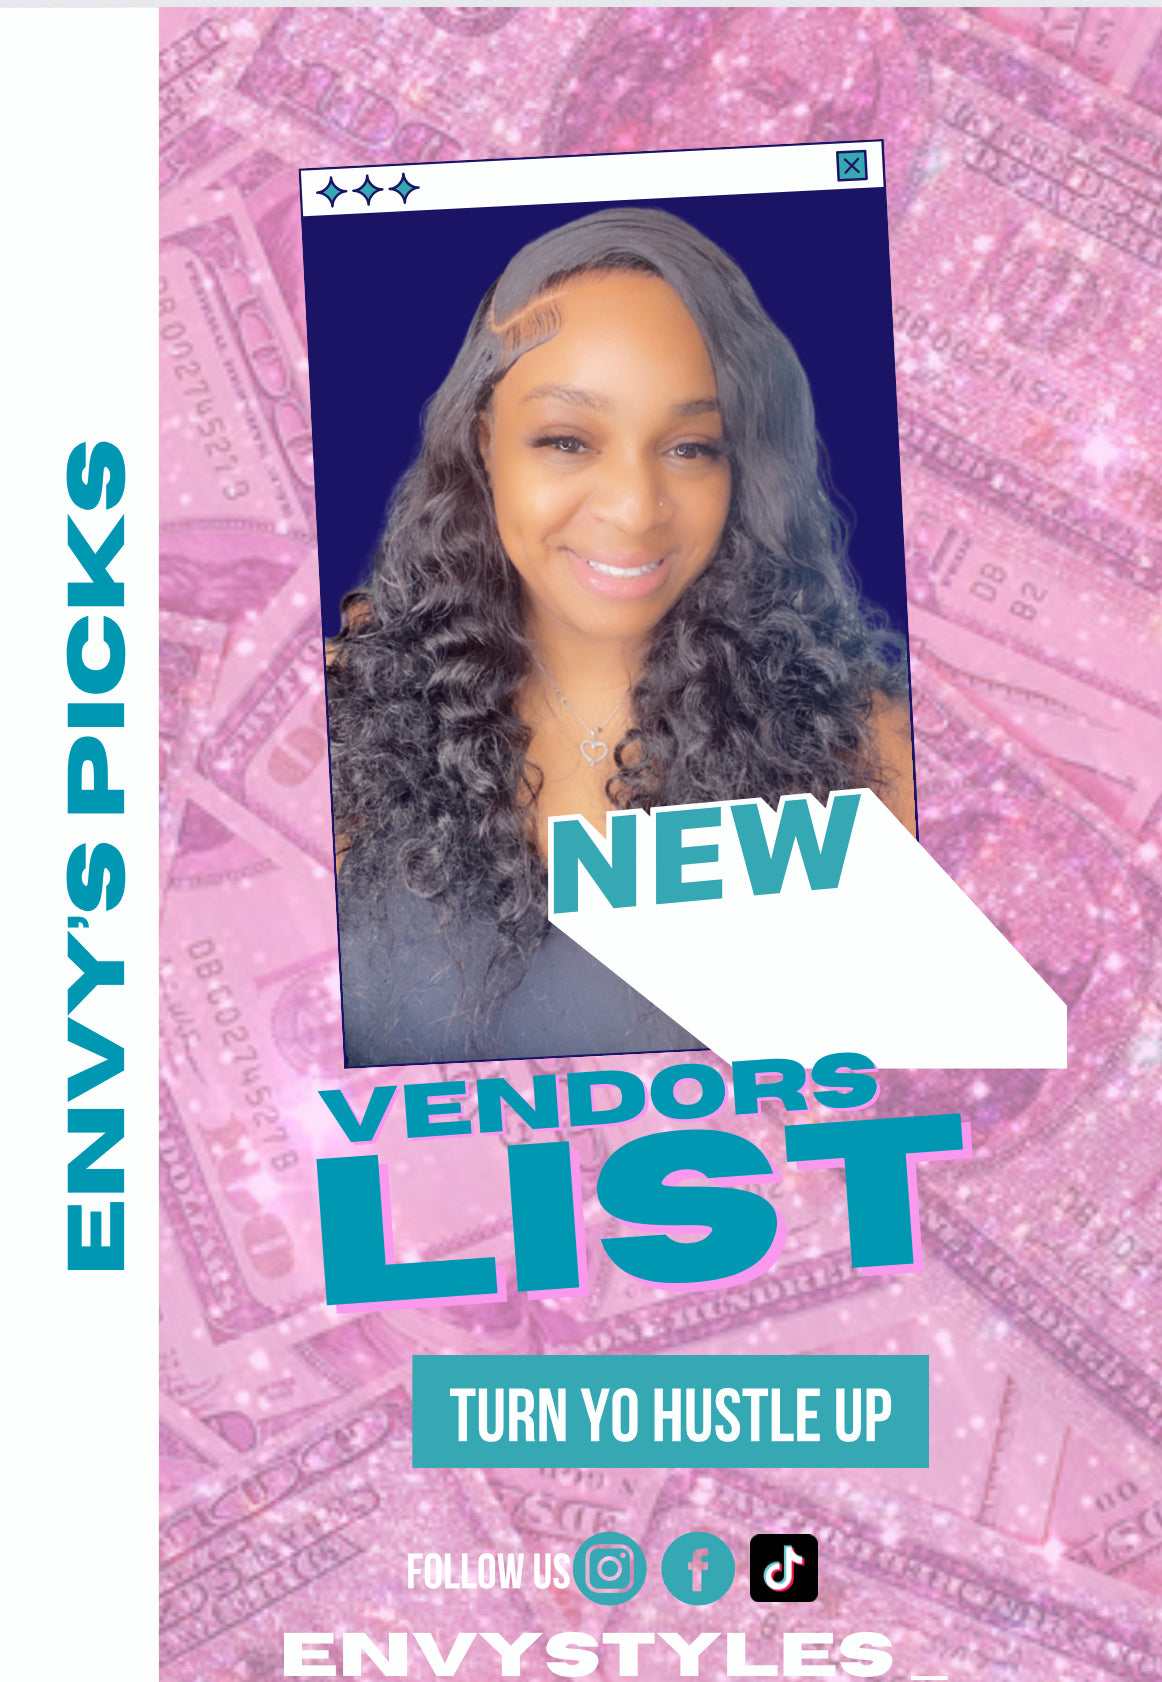 Envy's Personal vendors + Bonus ultimate Vendors list